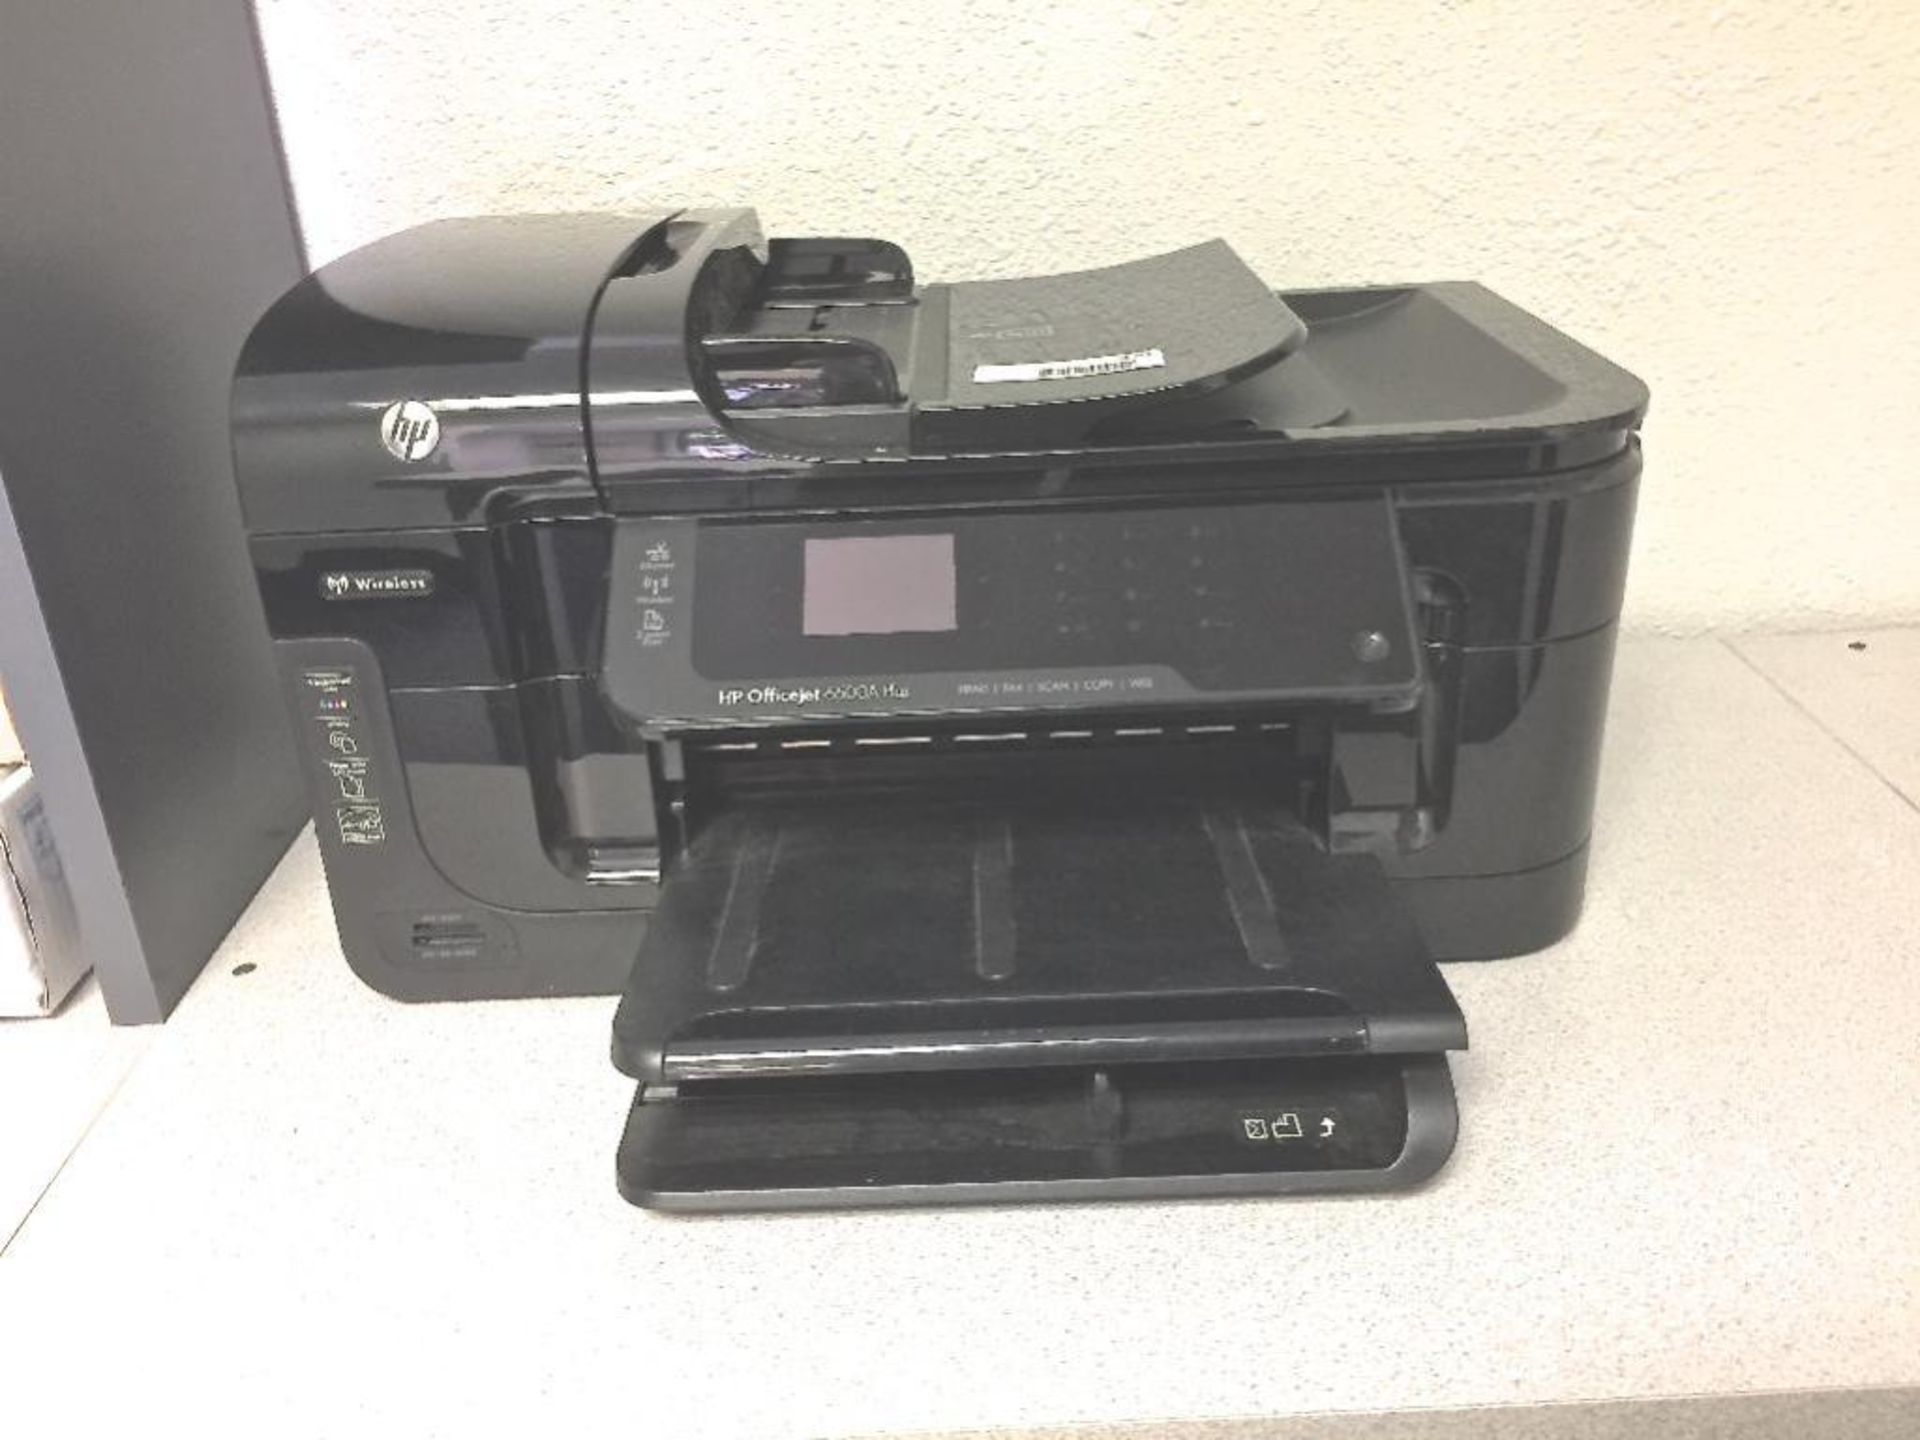 Printer. HP Printer all in one Model 6500 A+ Desk top type black color